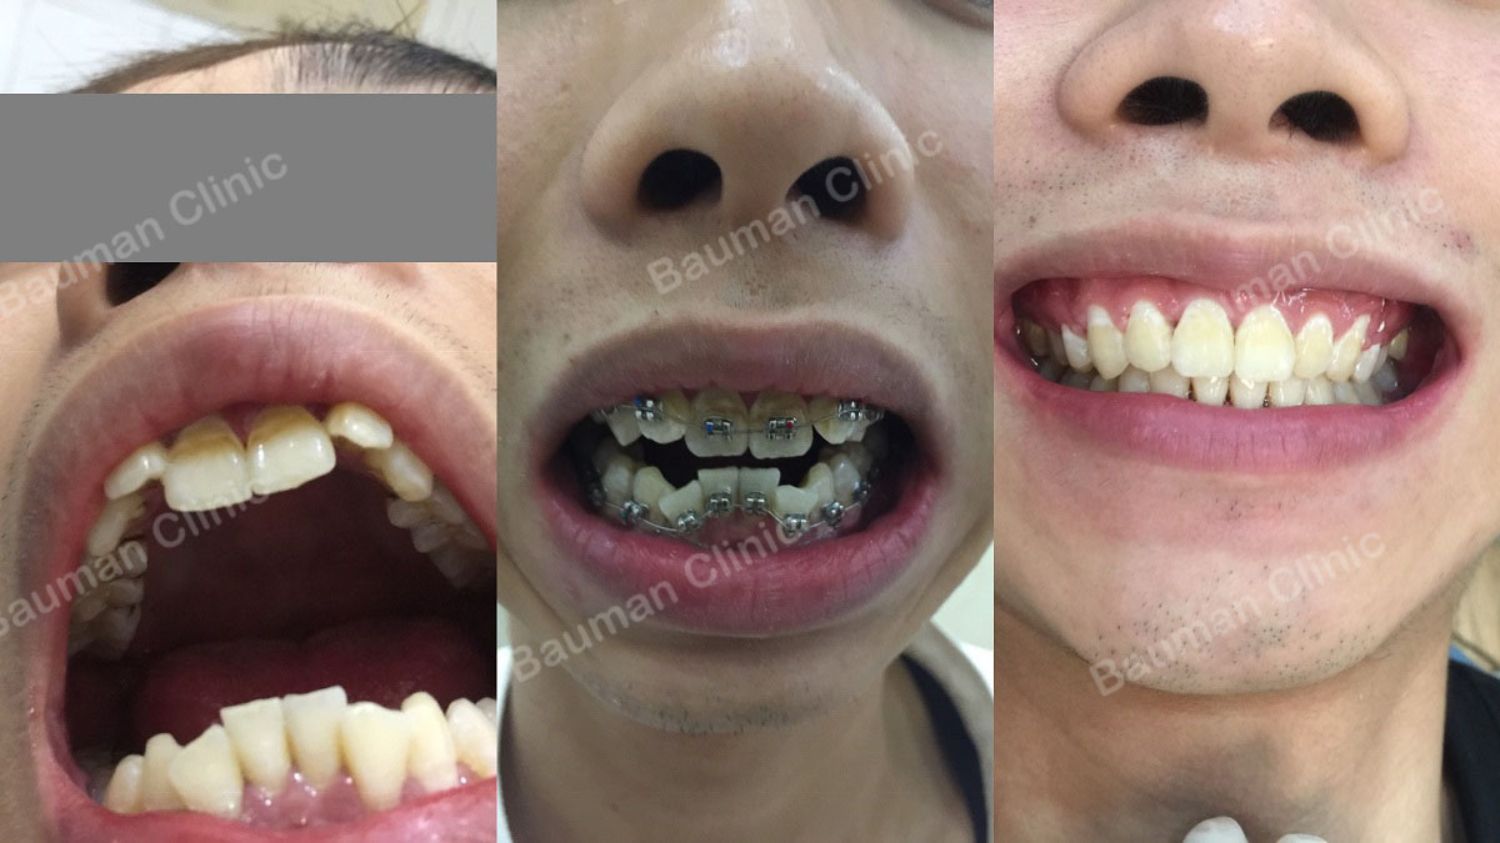 Ca niềng răng số 5076 - Nha khoa Bauman Clinic